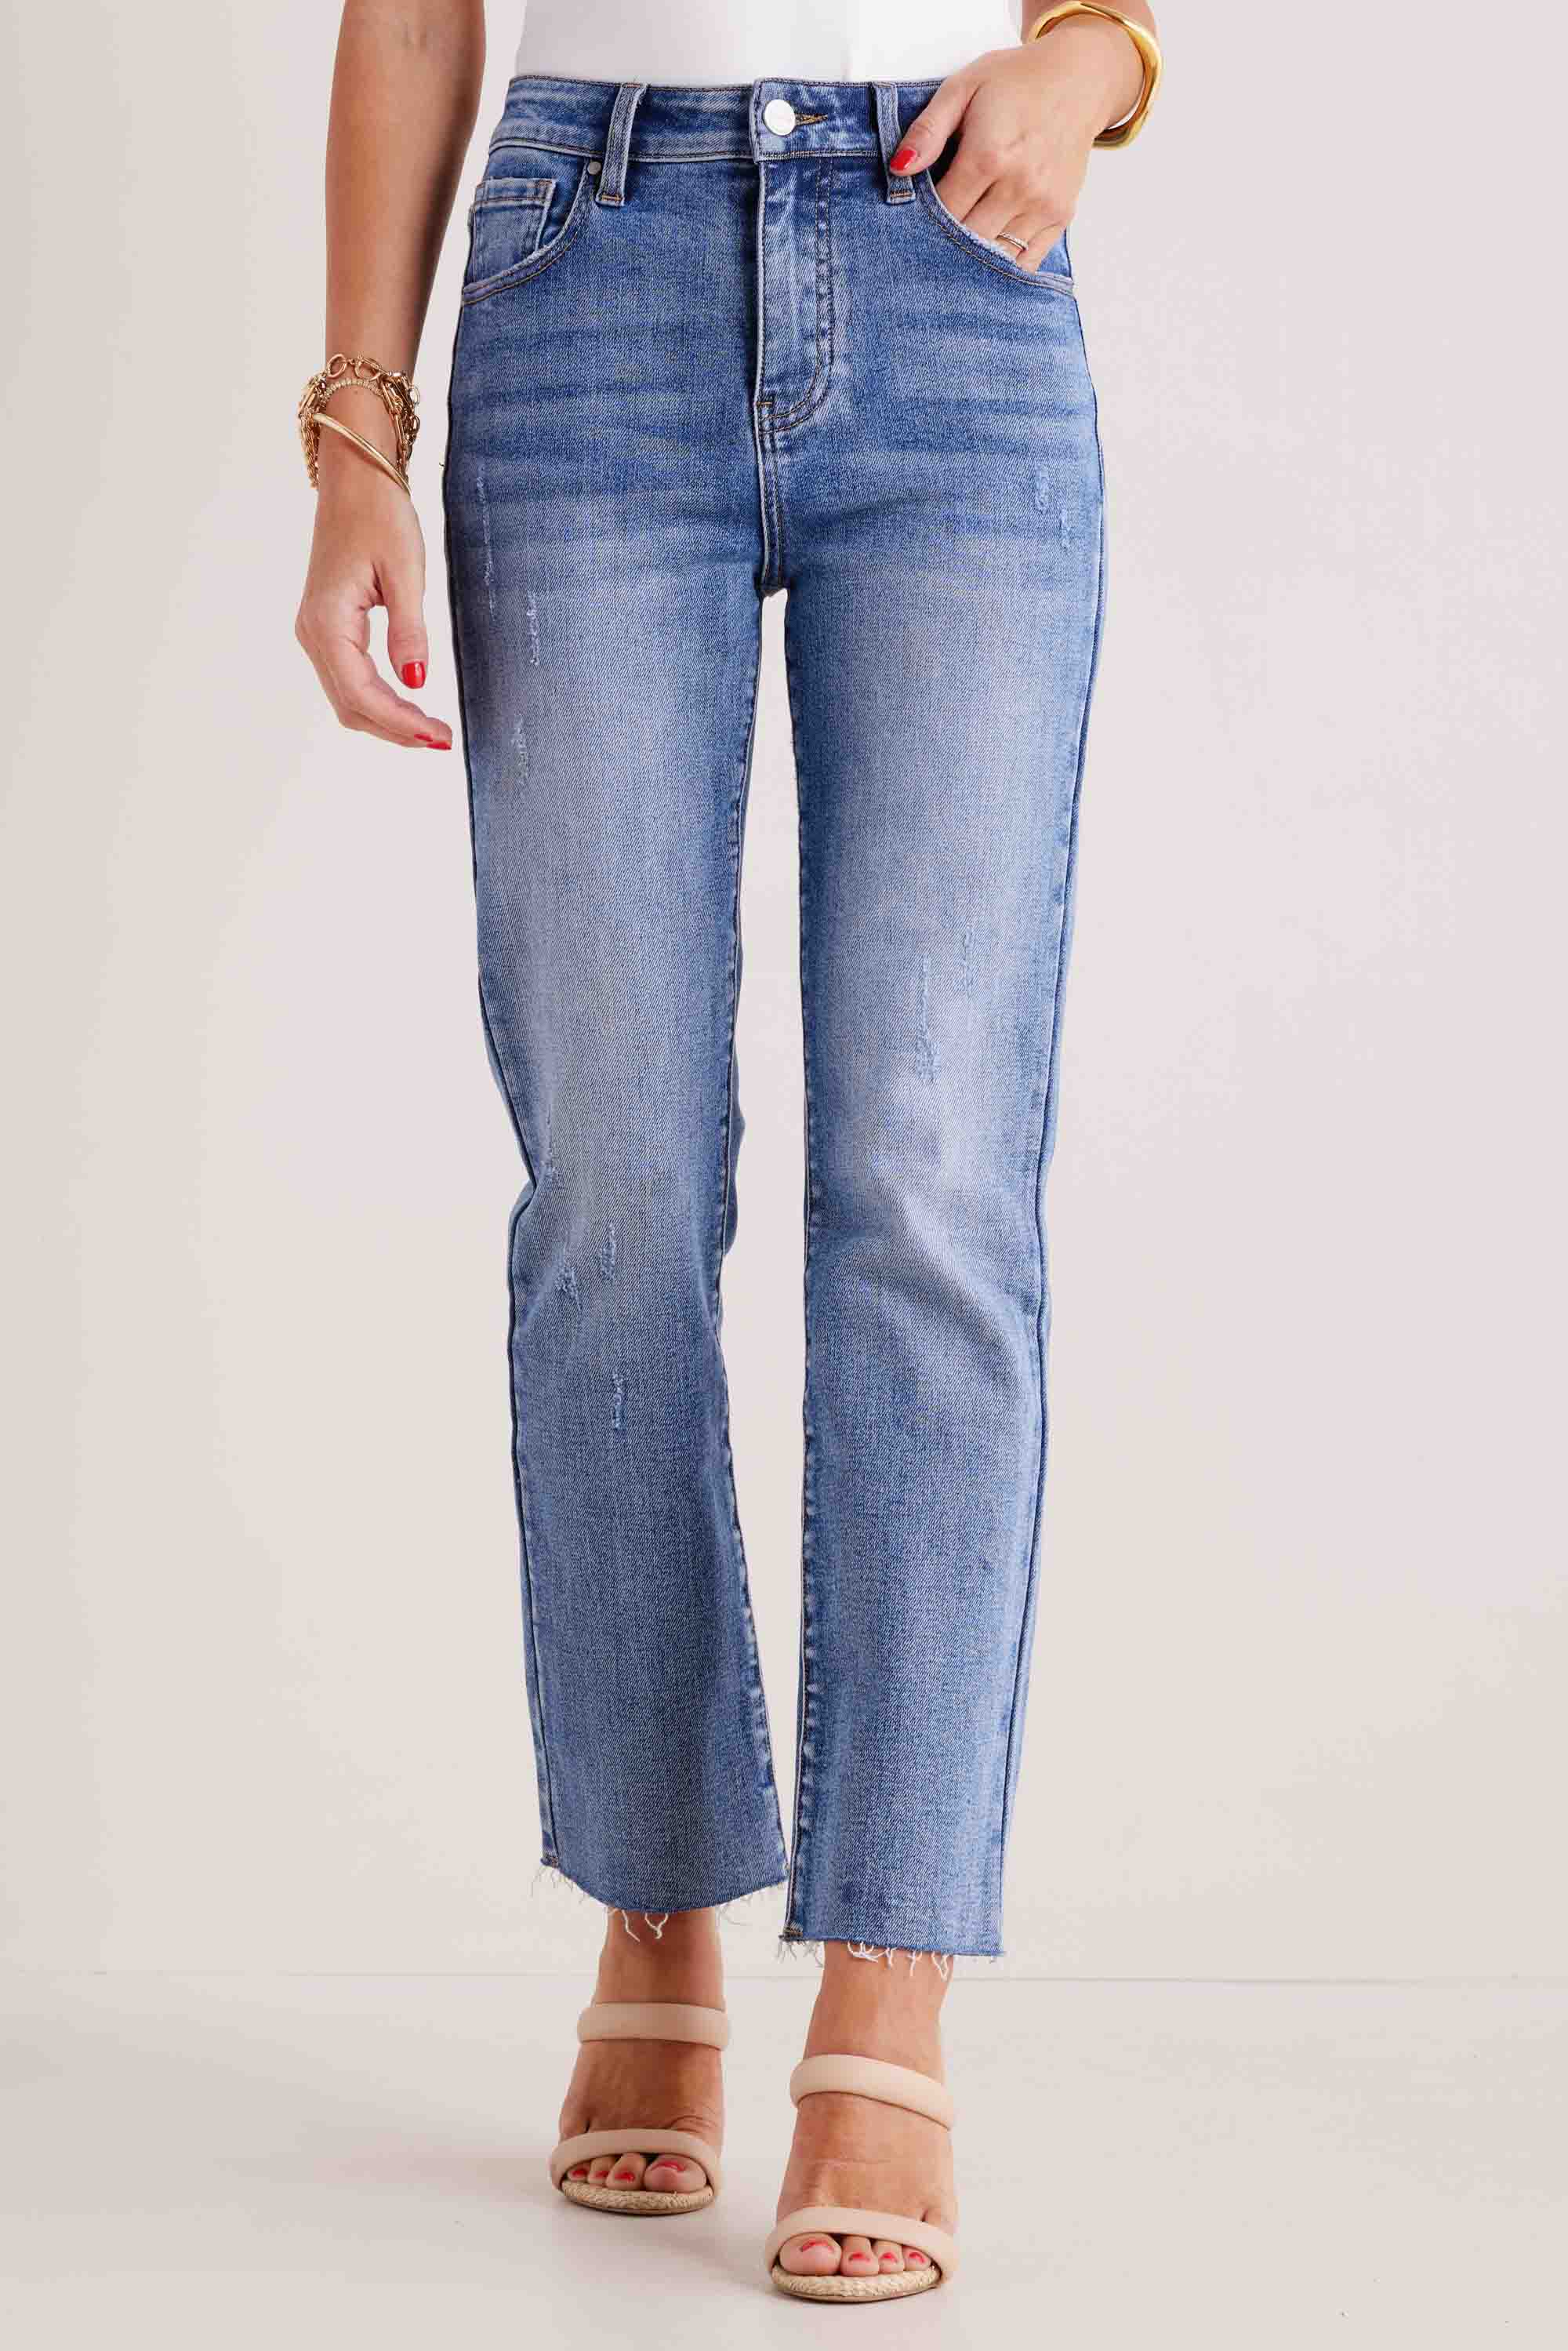 Aliyah Jeans